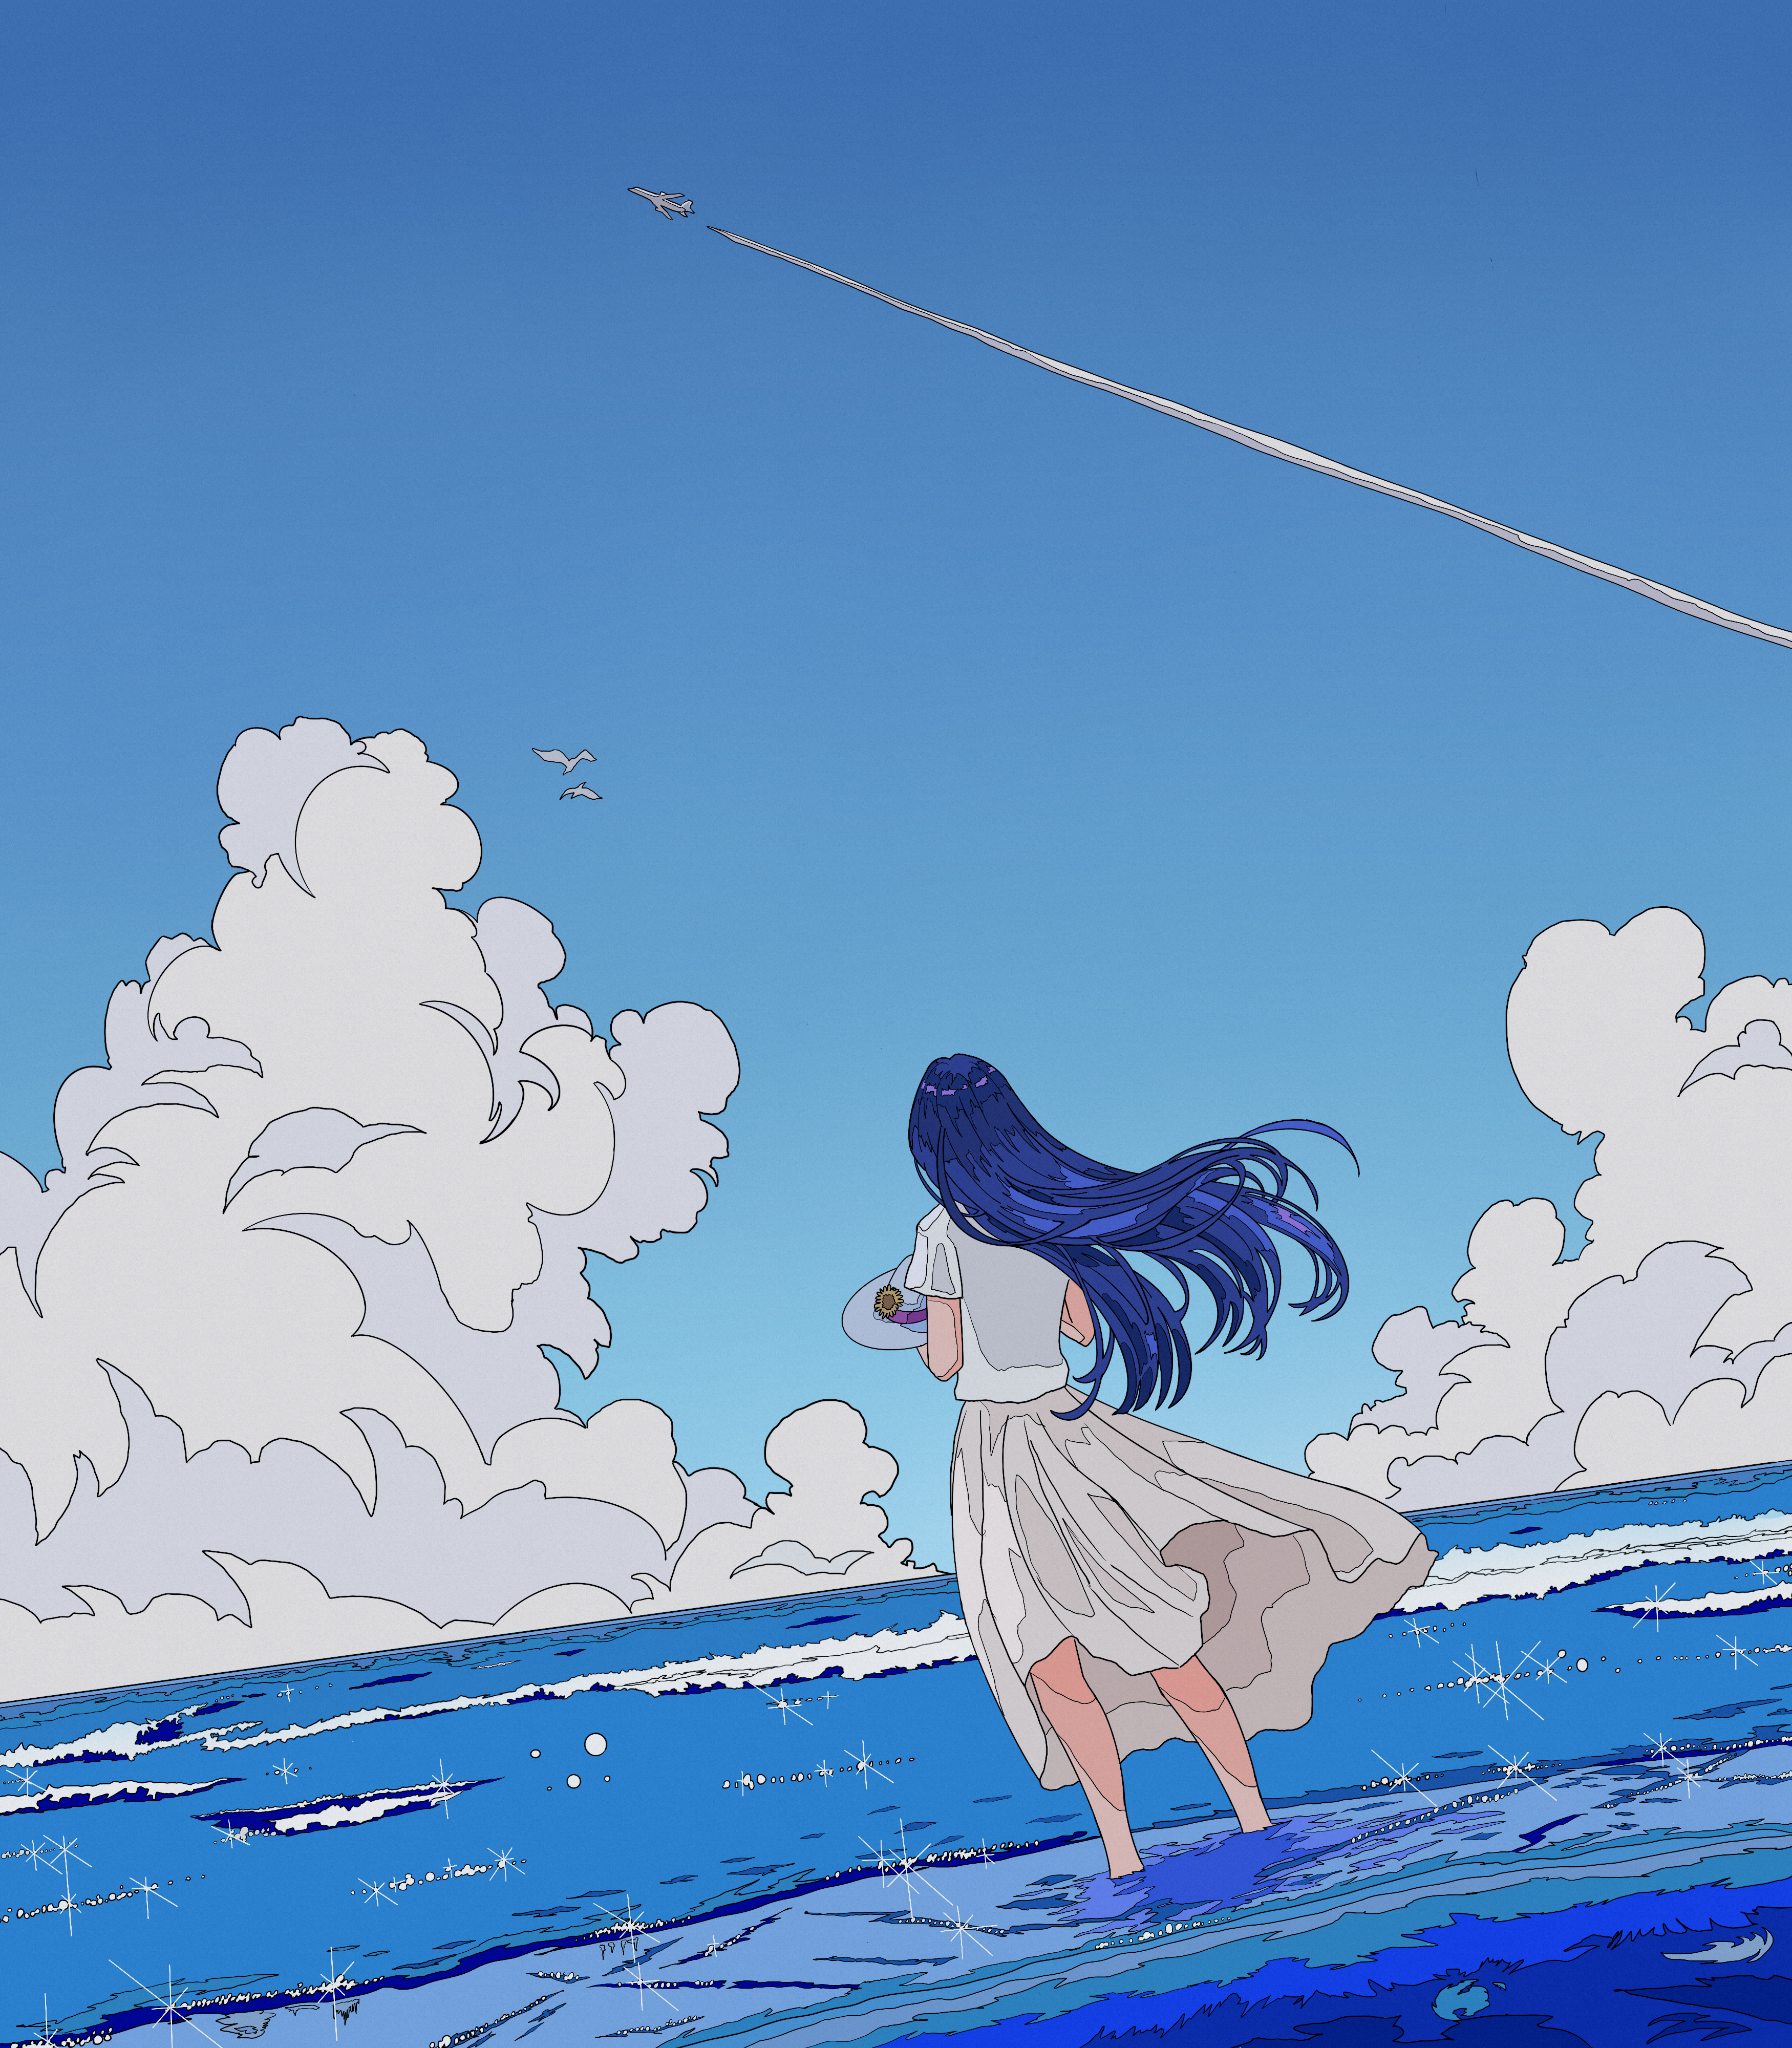 Umijin Anime Digital Art Artwork Illustration Environment Landscape Sea Clouds Dress Anime Girls Wom 3500x4000